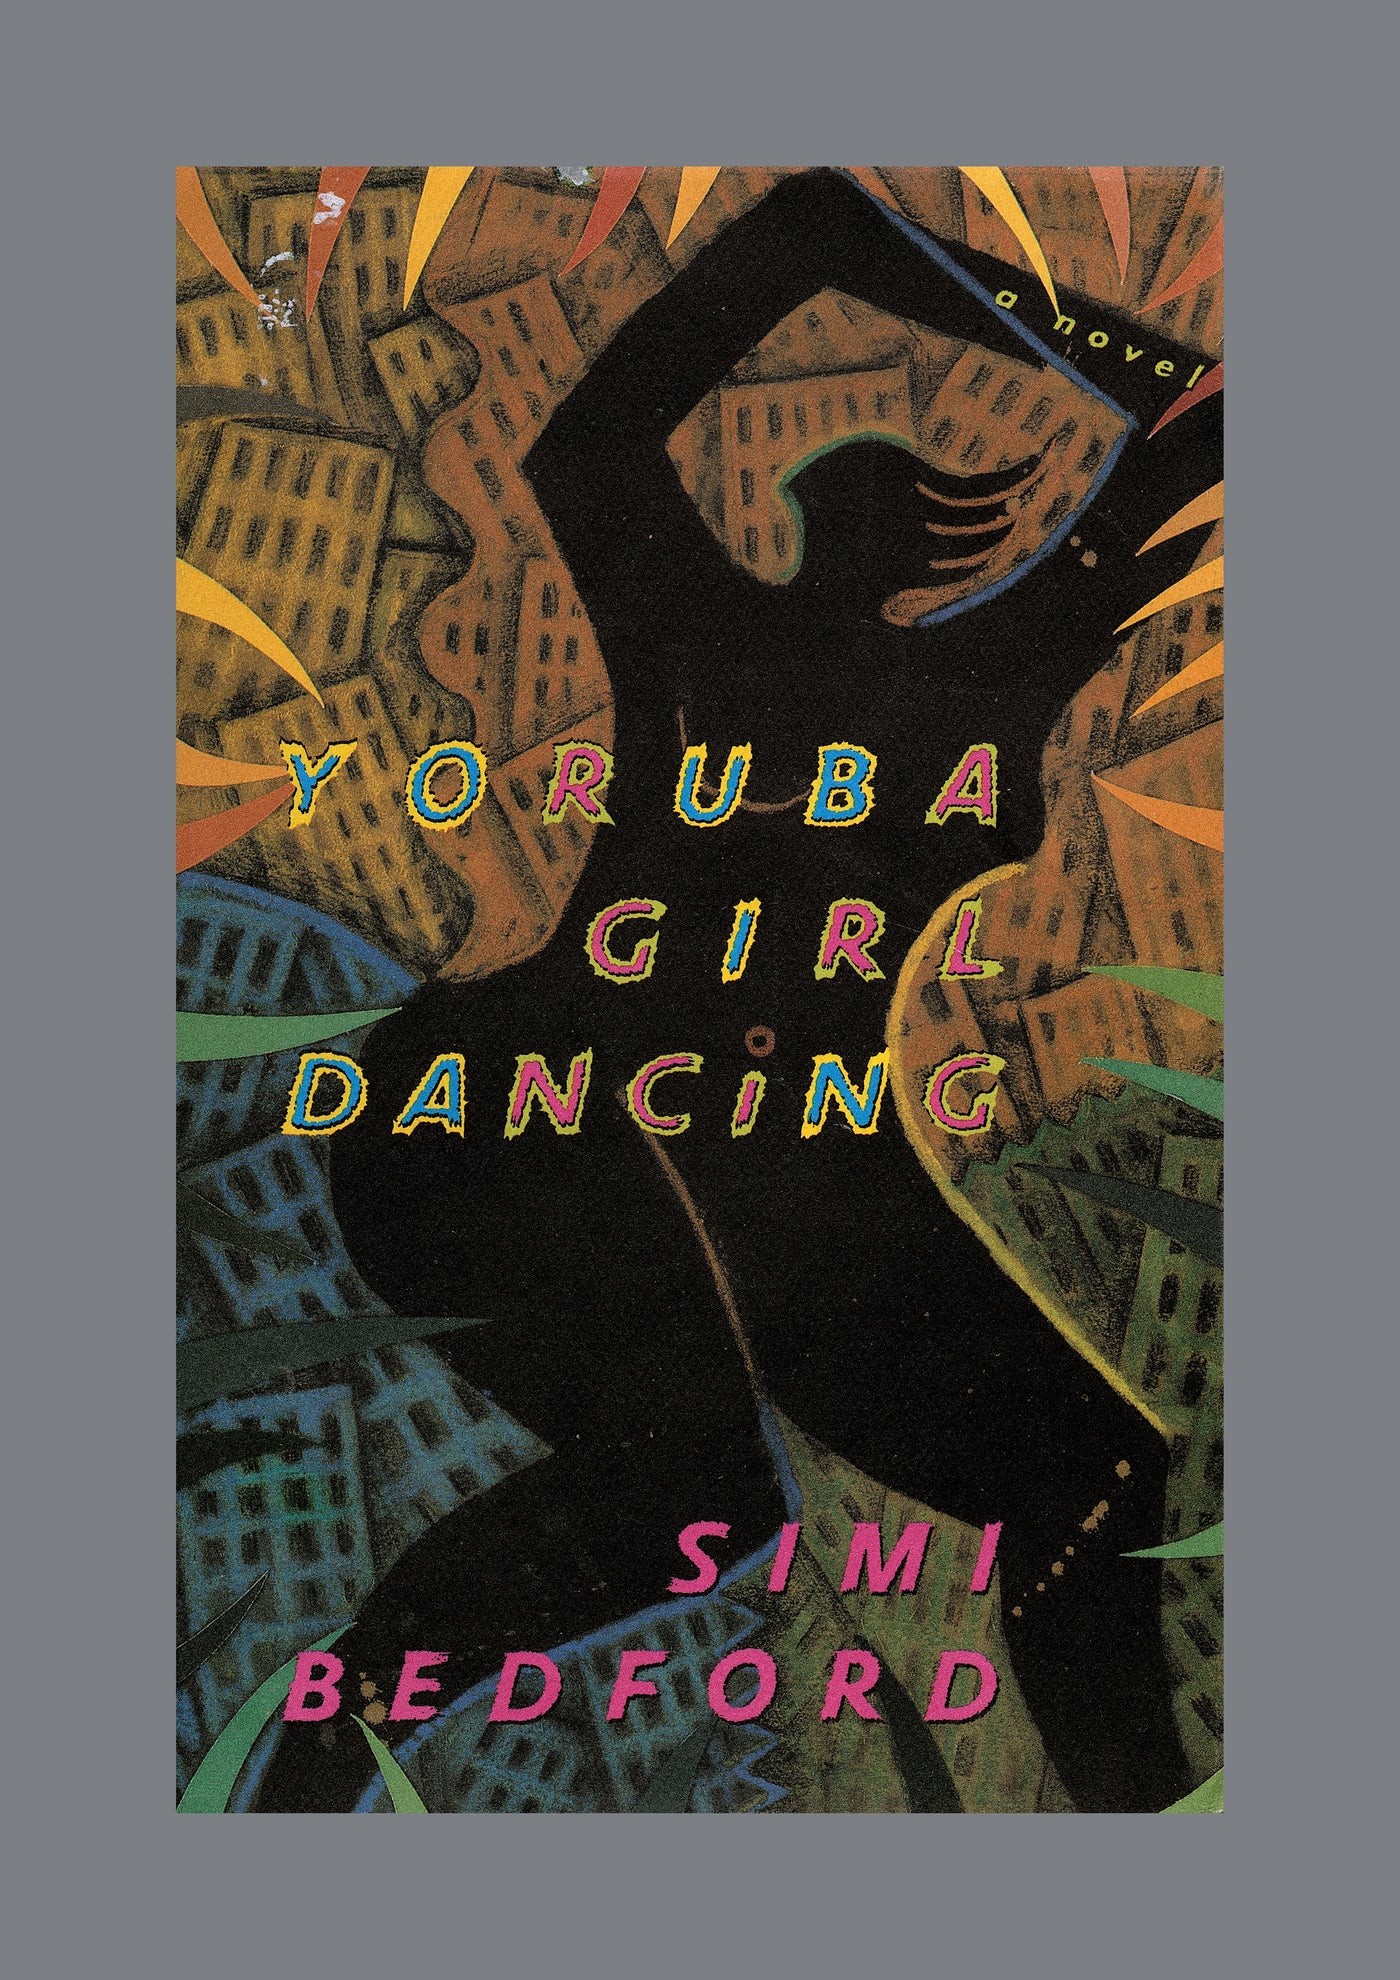 yoruba girl dancing